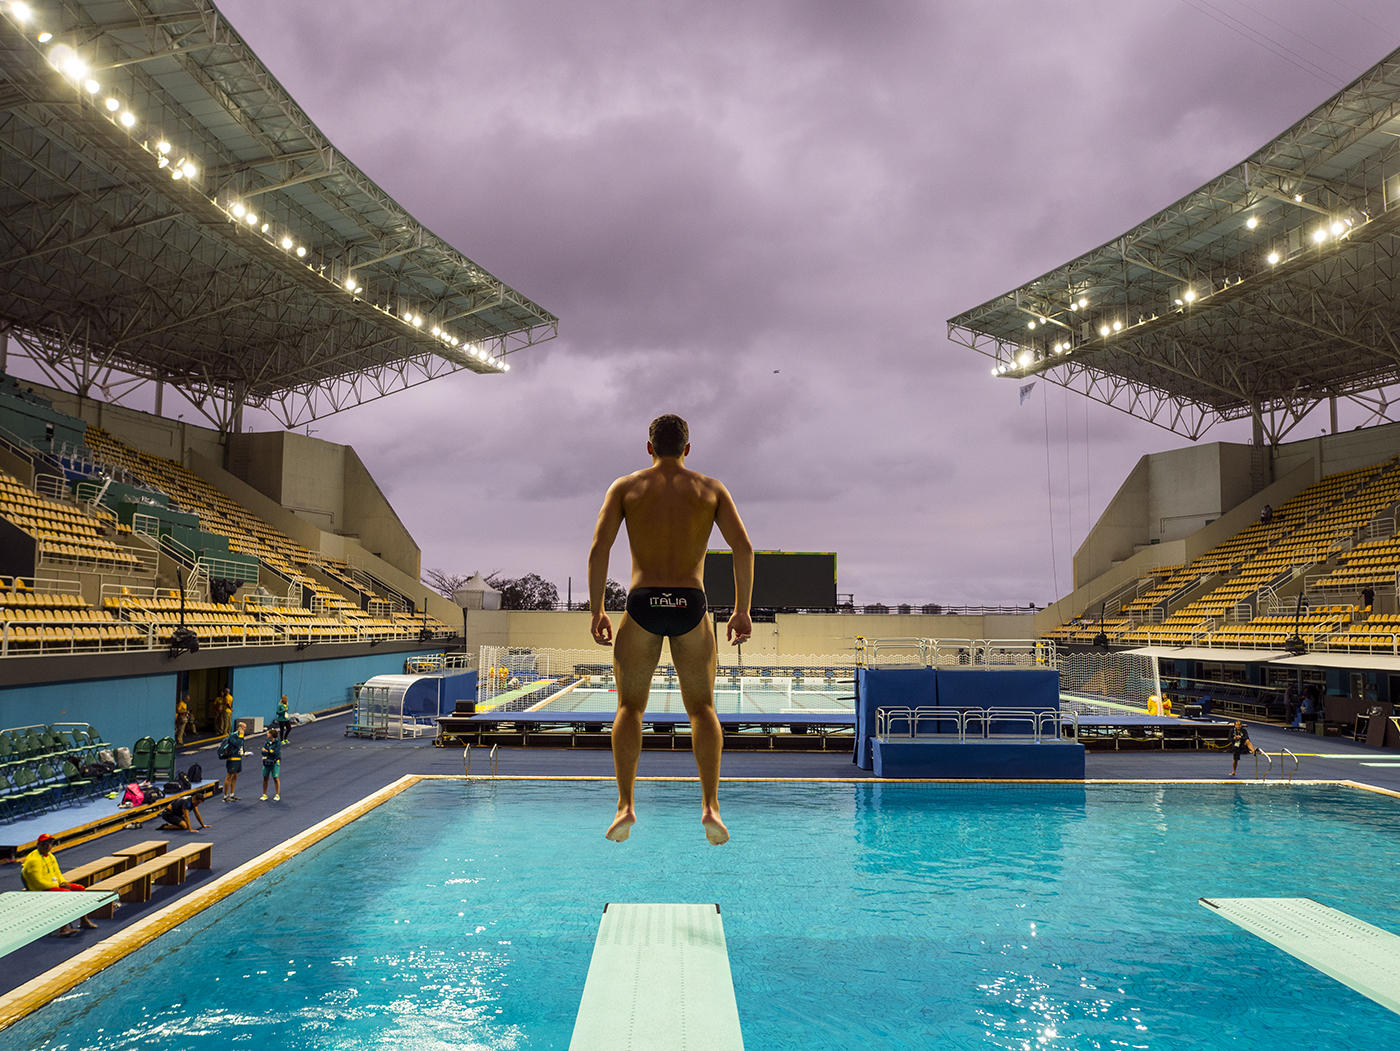 Italian divers in training : Rio Olymplcs 2016 : David Burnett | Photographer